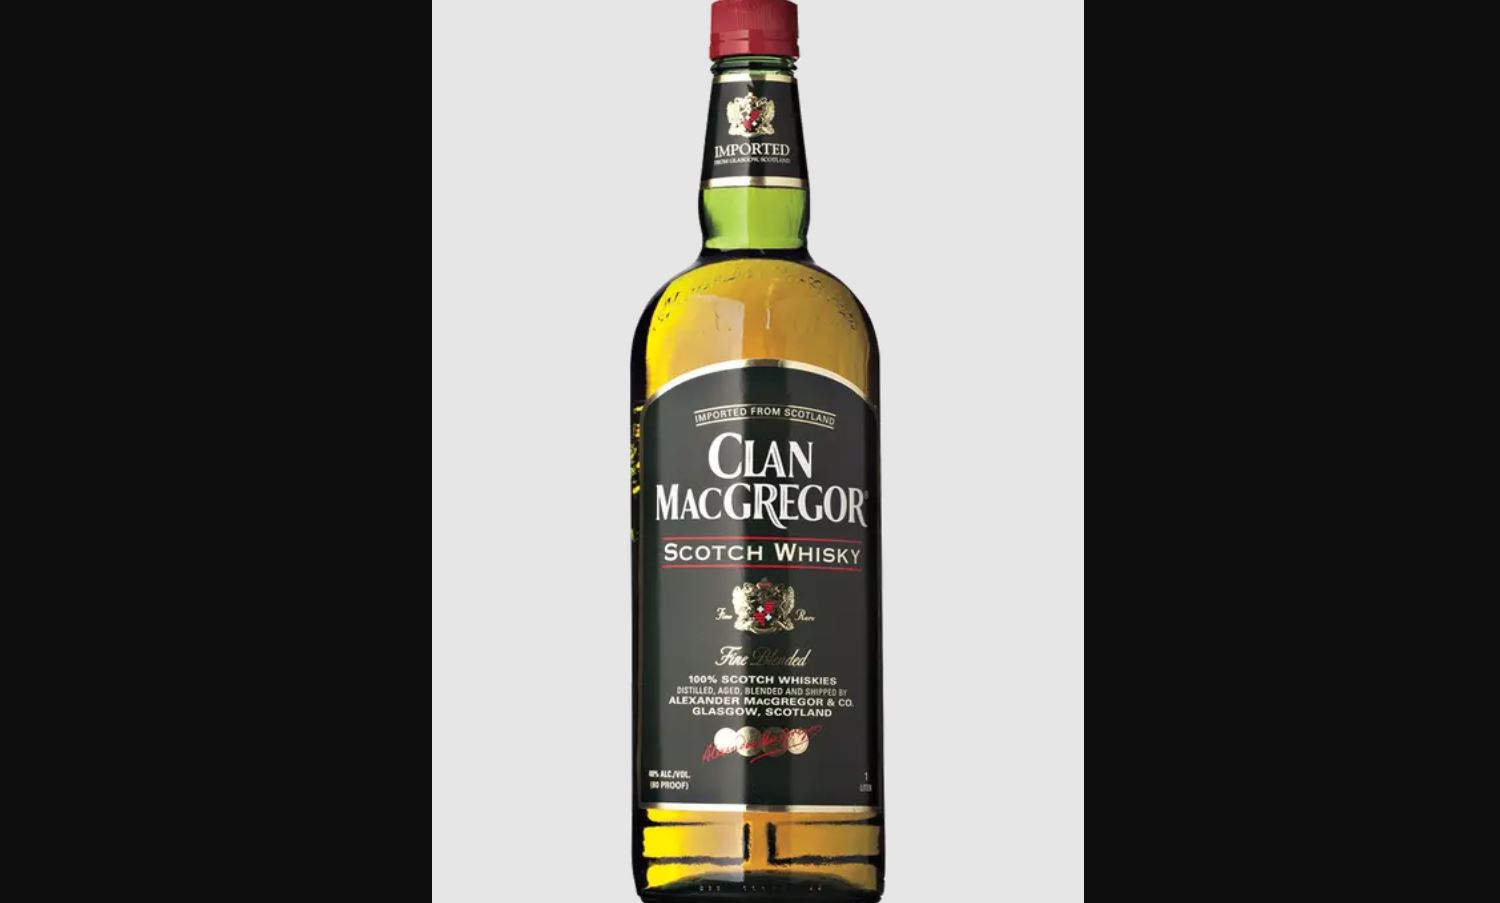 Clan MacGregor Blended Scotch